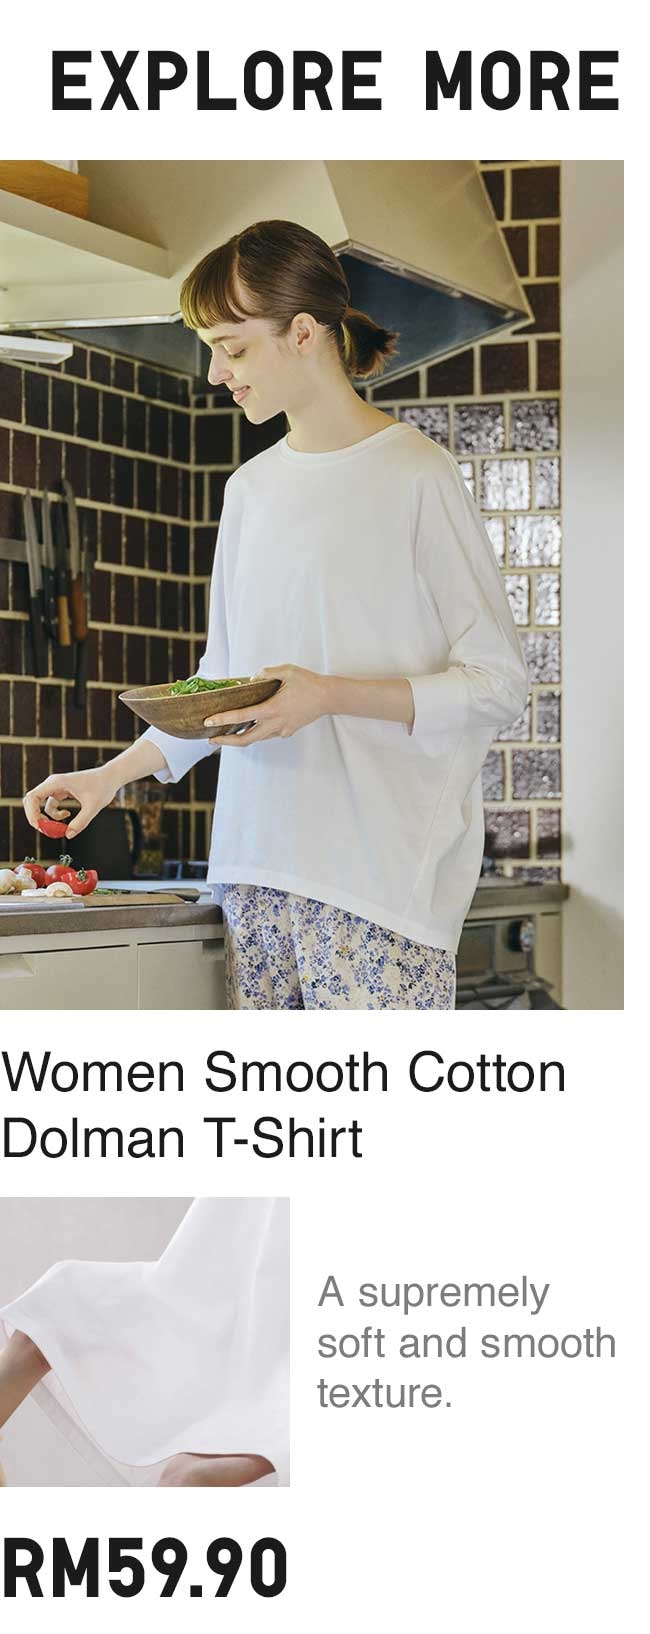 WOMEN SMOOTH COTTON DOLMAN T-SHIRT